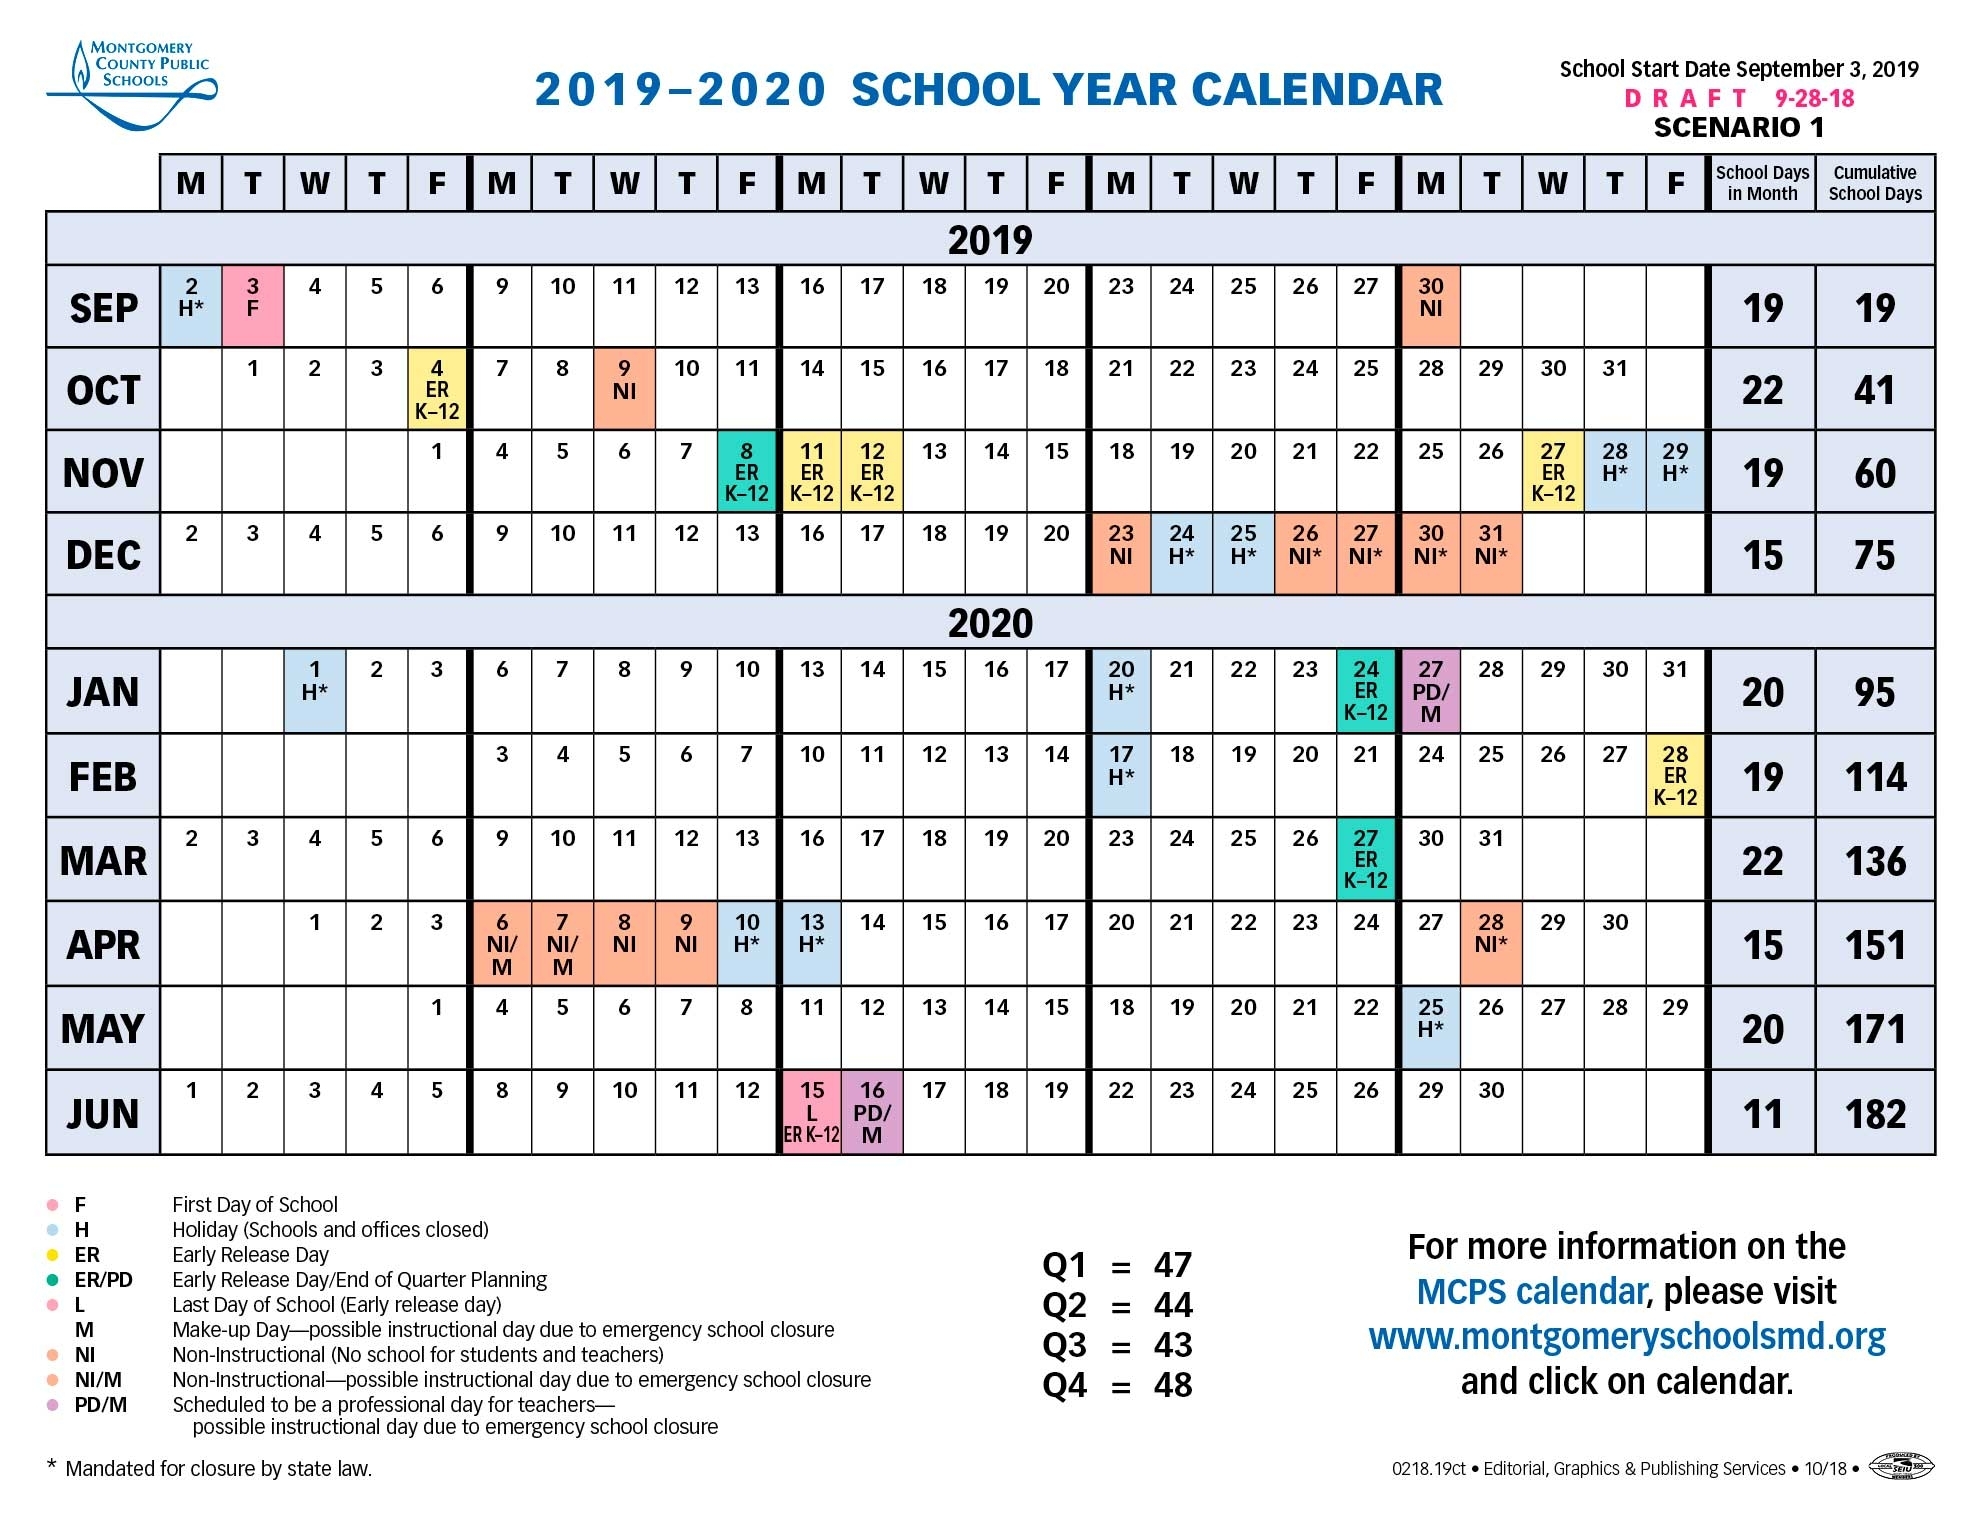 School Board Approves Longer Spring Break For 2019-2020 Calendar with regard to 2019-2020 Hebrew Calendar